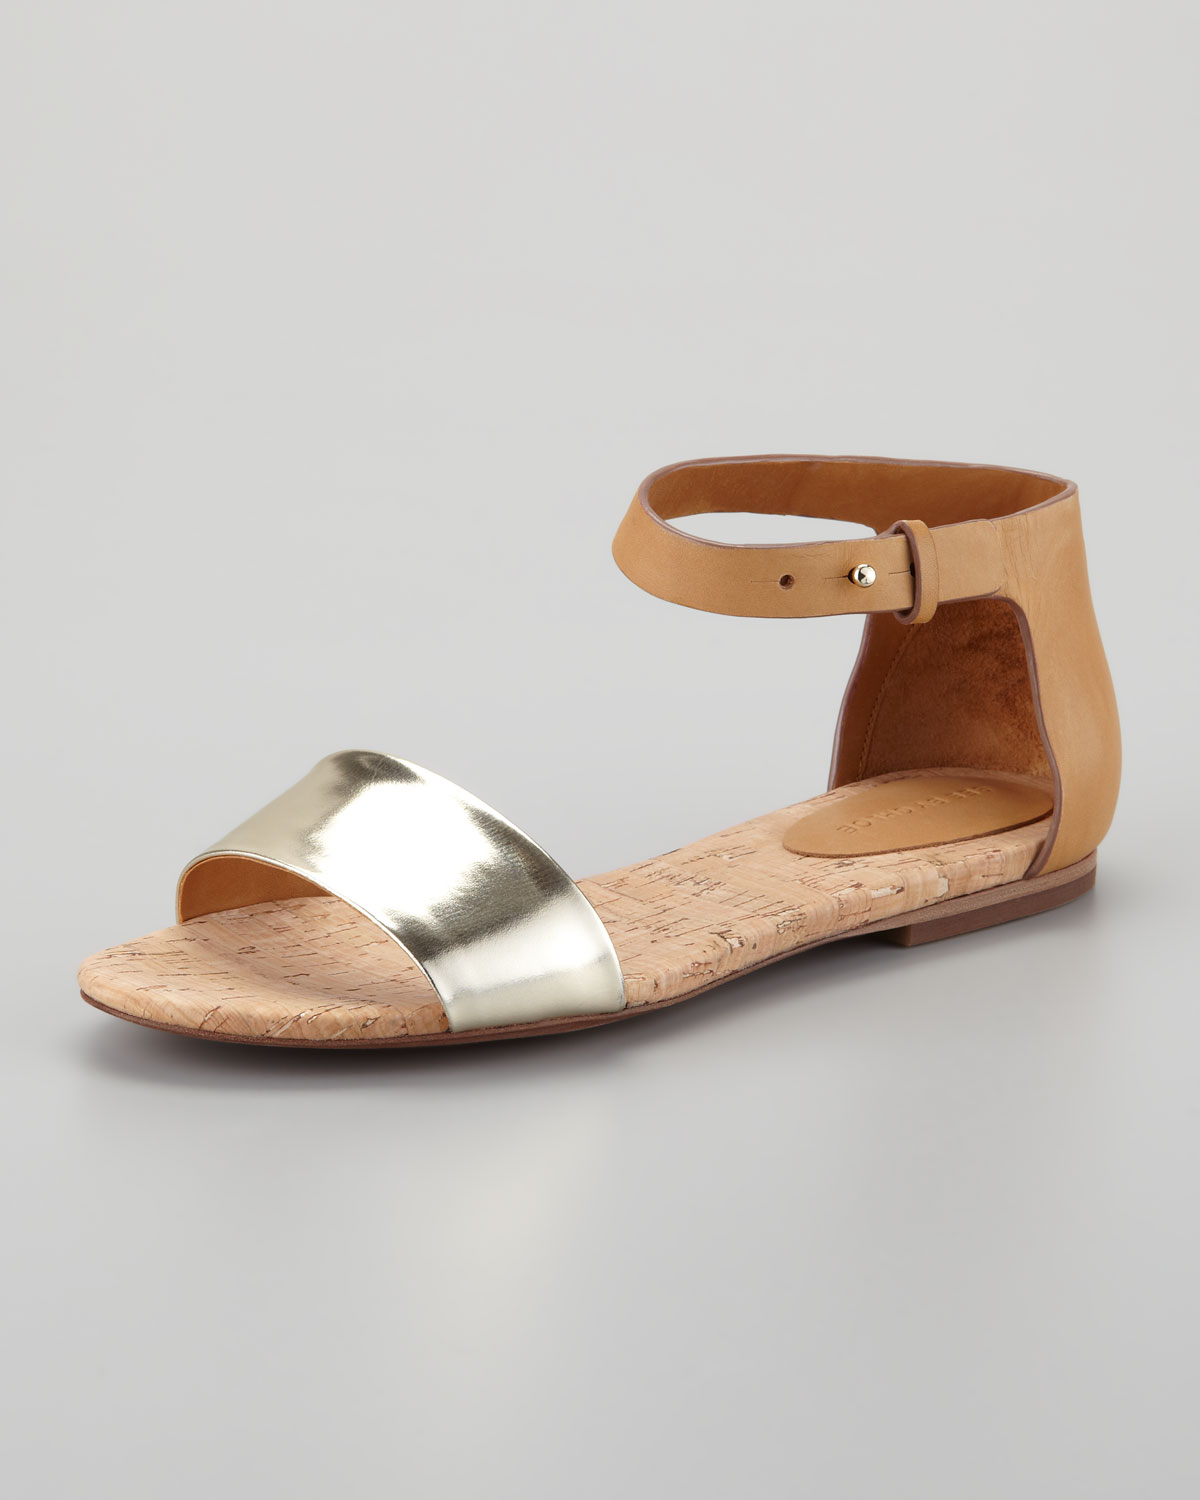 Lyst - See By Chloé Cork Flat Sandal in Metallic